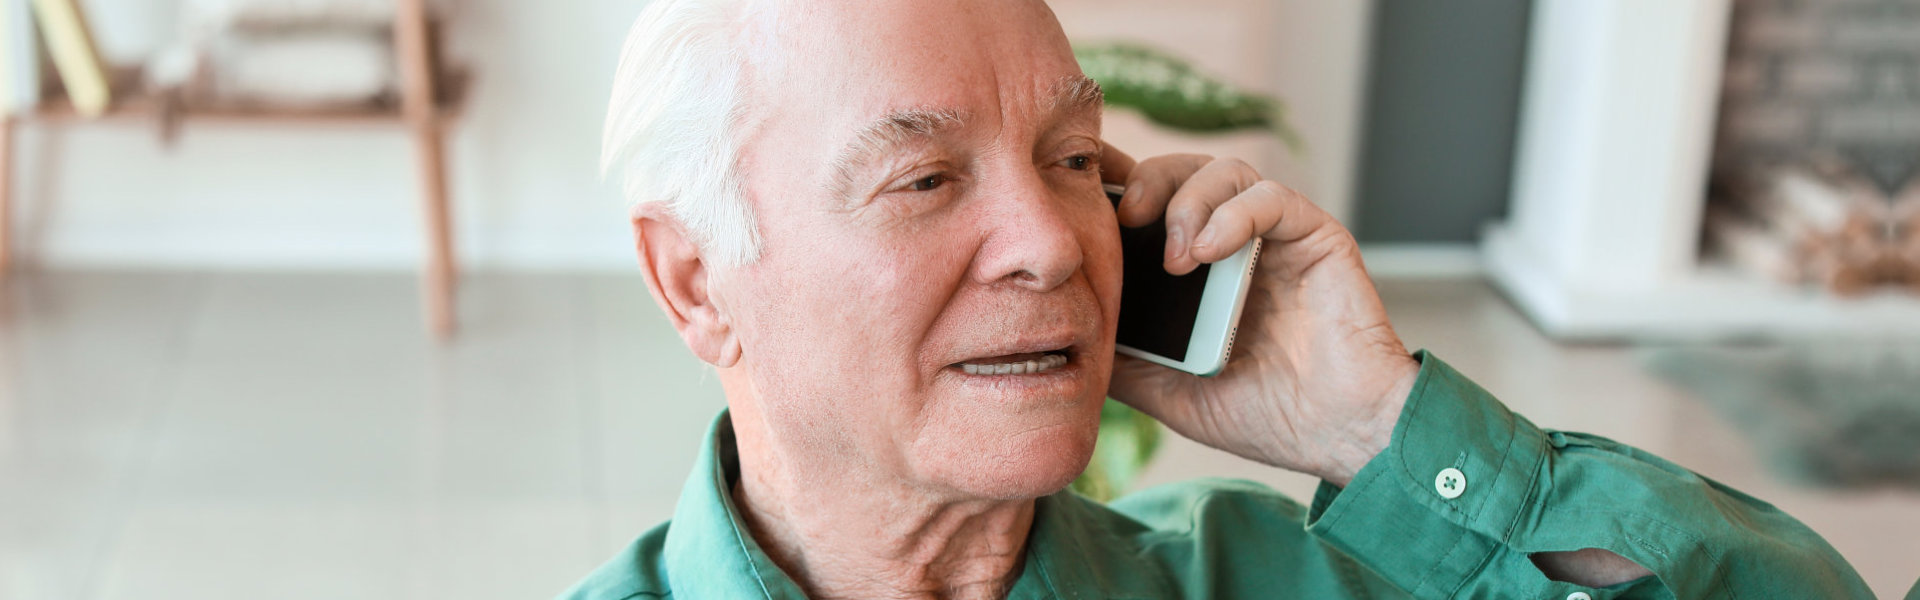 Elderly using phone